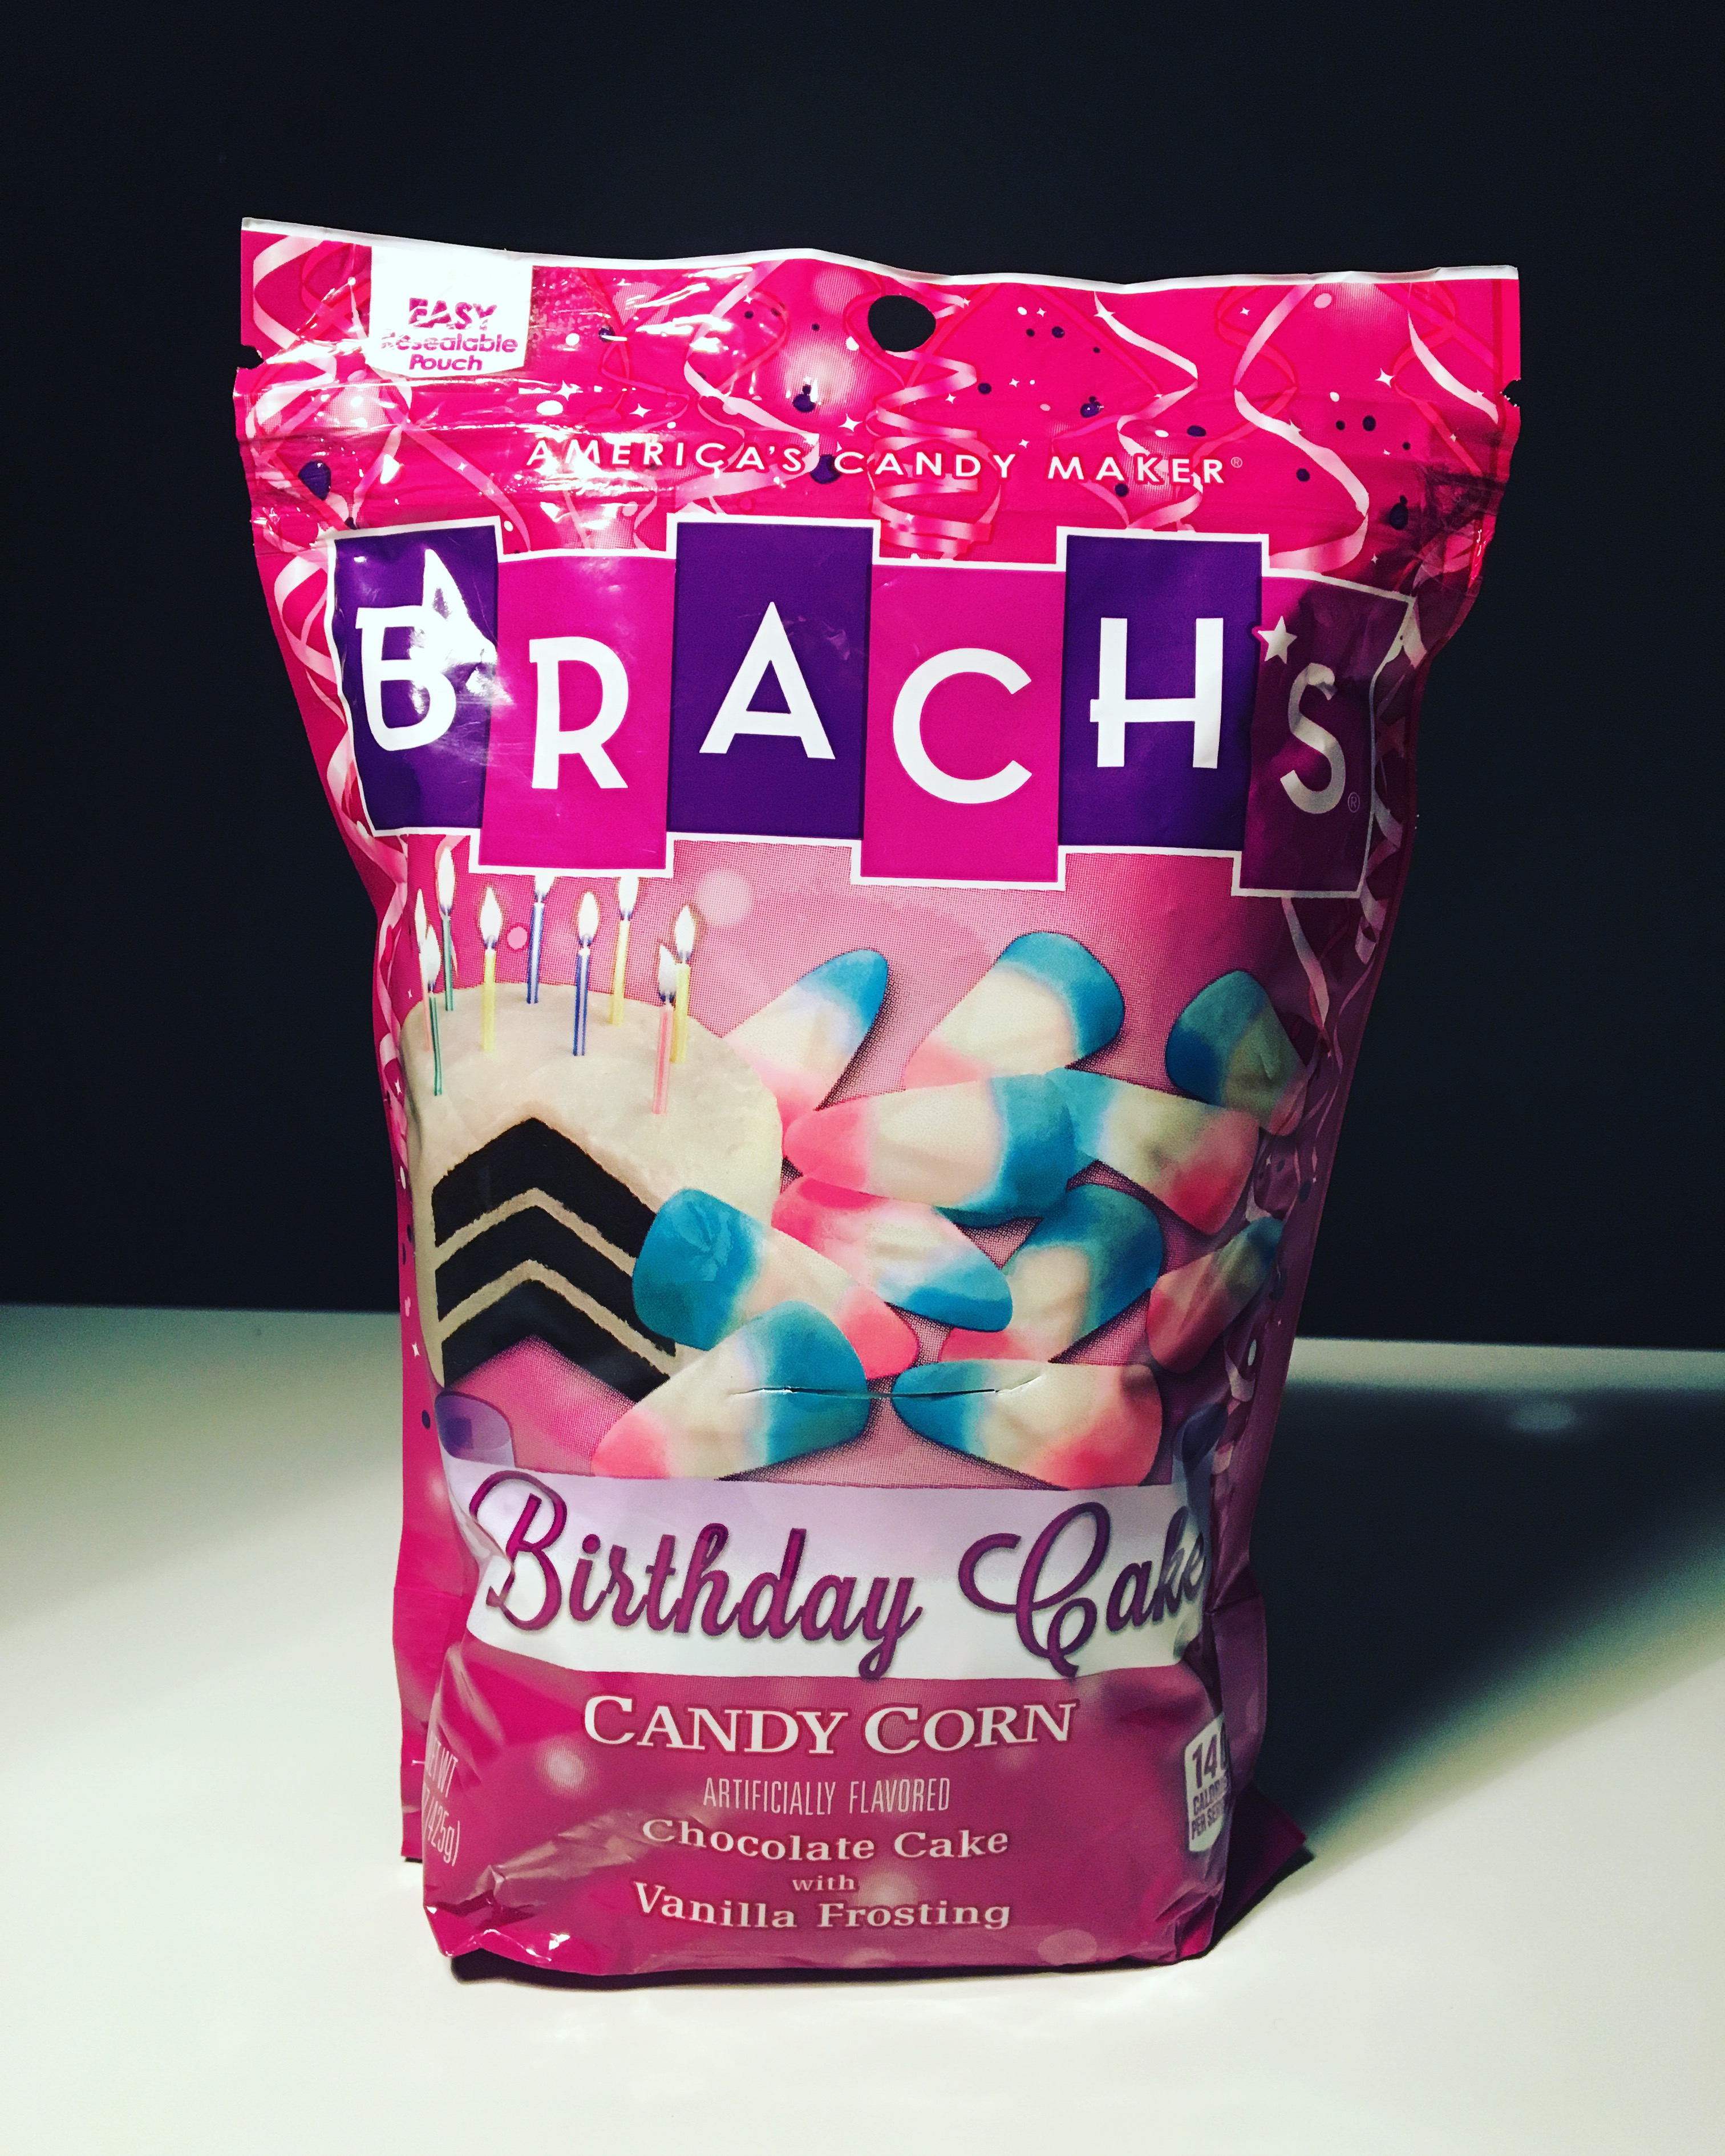 REVIEW: Brach's Birthday Cake Candy Corn - Junk Banter